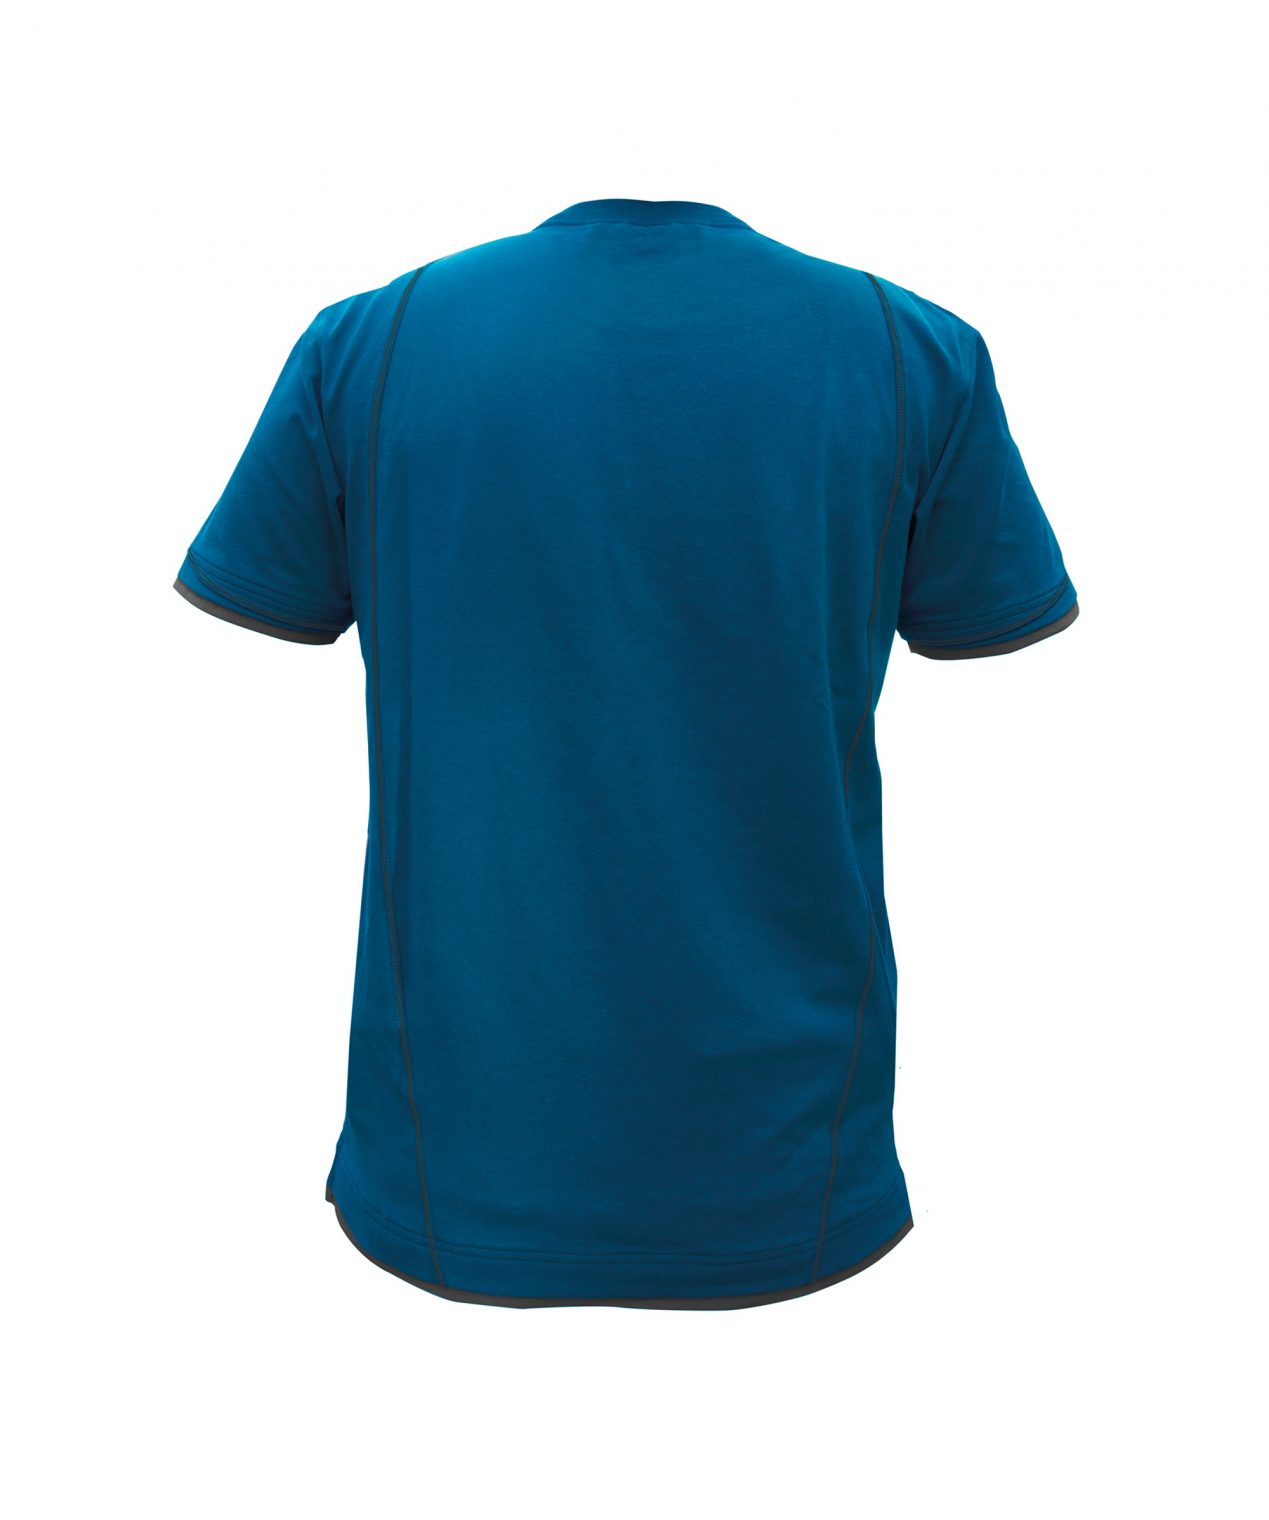 kinetic t shirt azure blue anthracite grey back